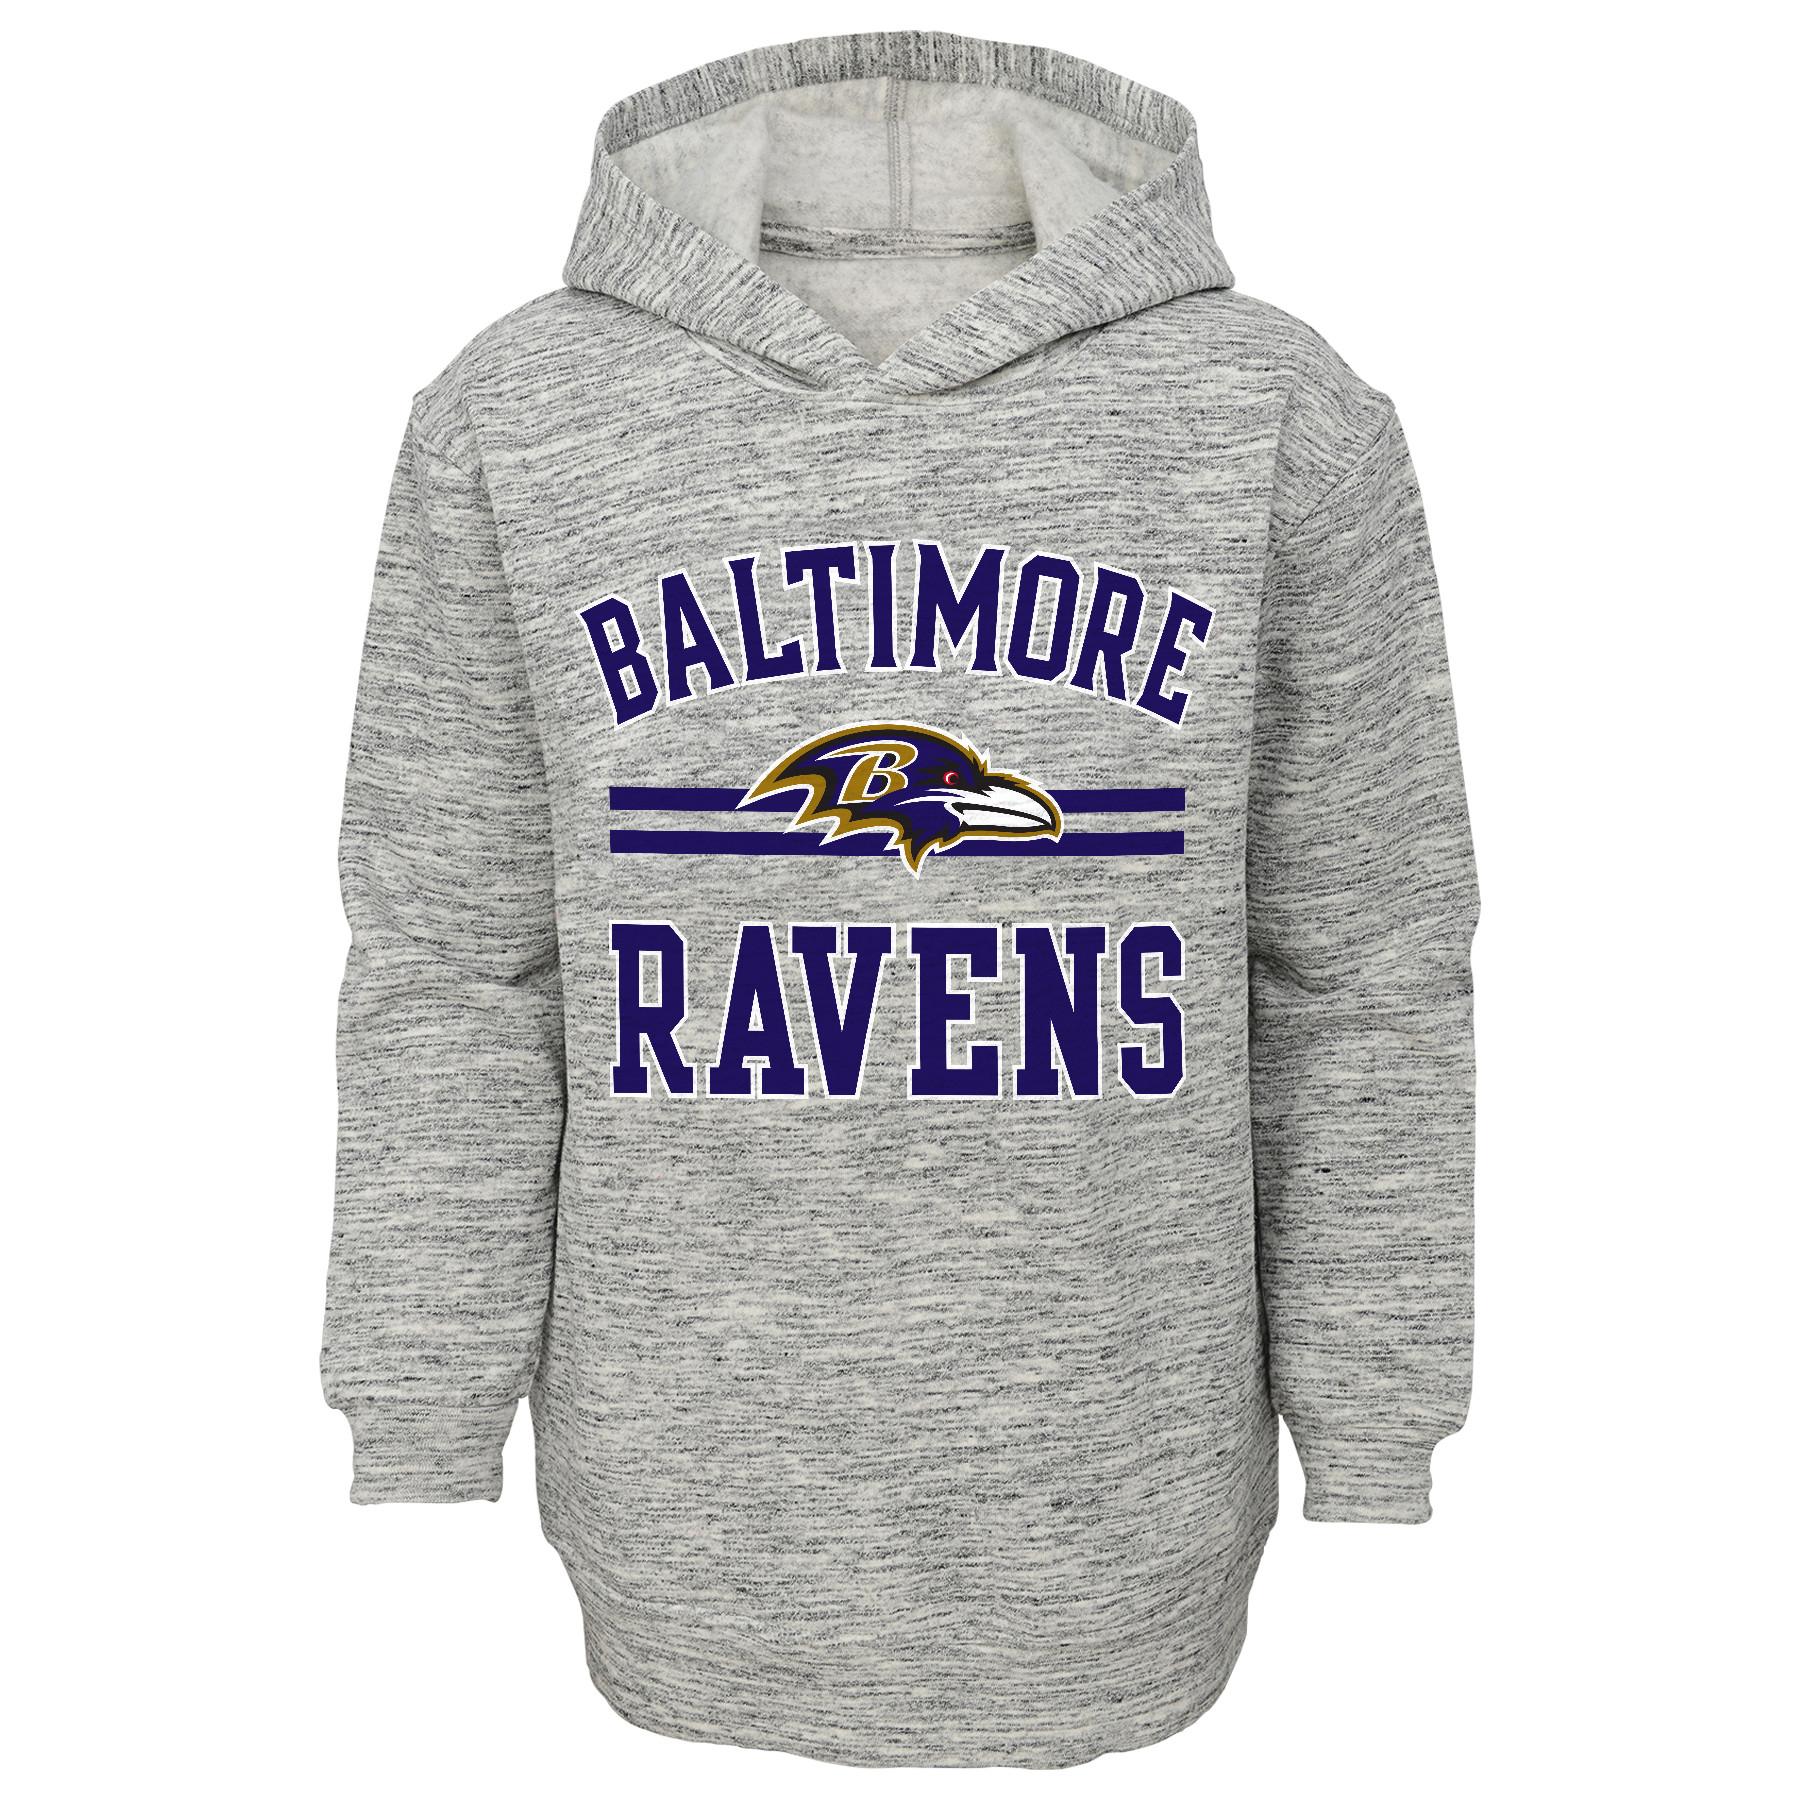 NFL Boys' Graphic Hoodie - Baltimore Ravens